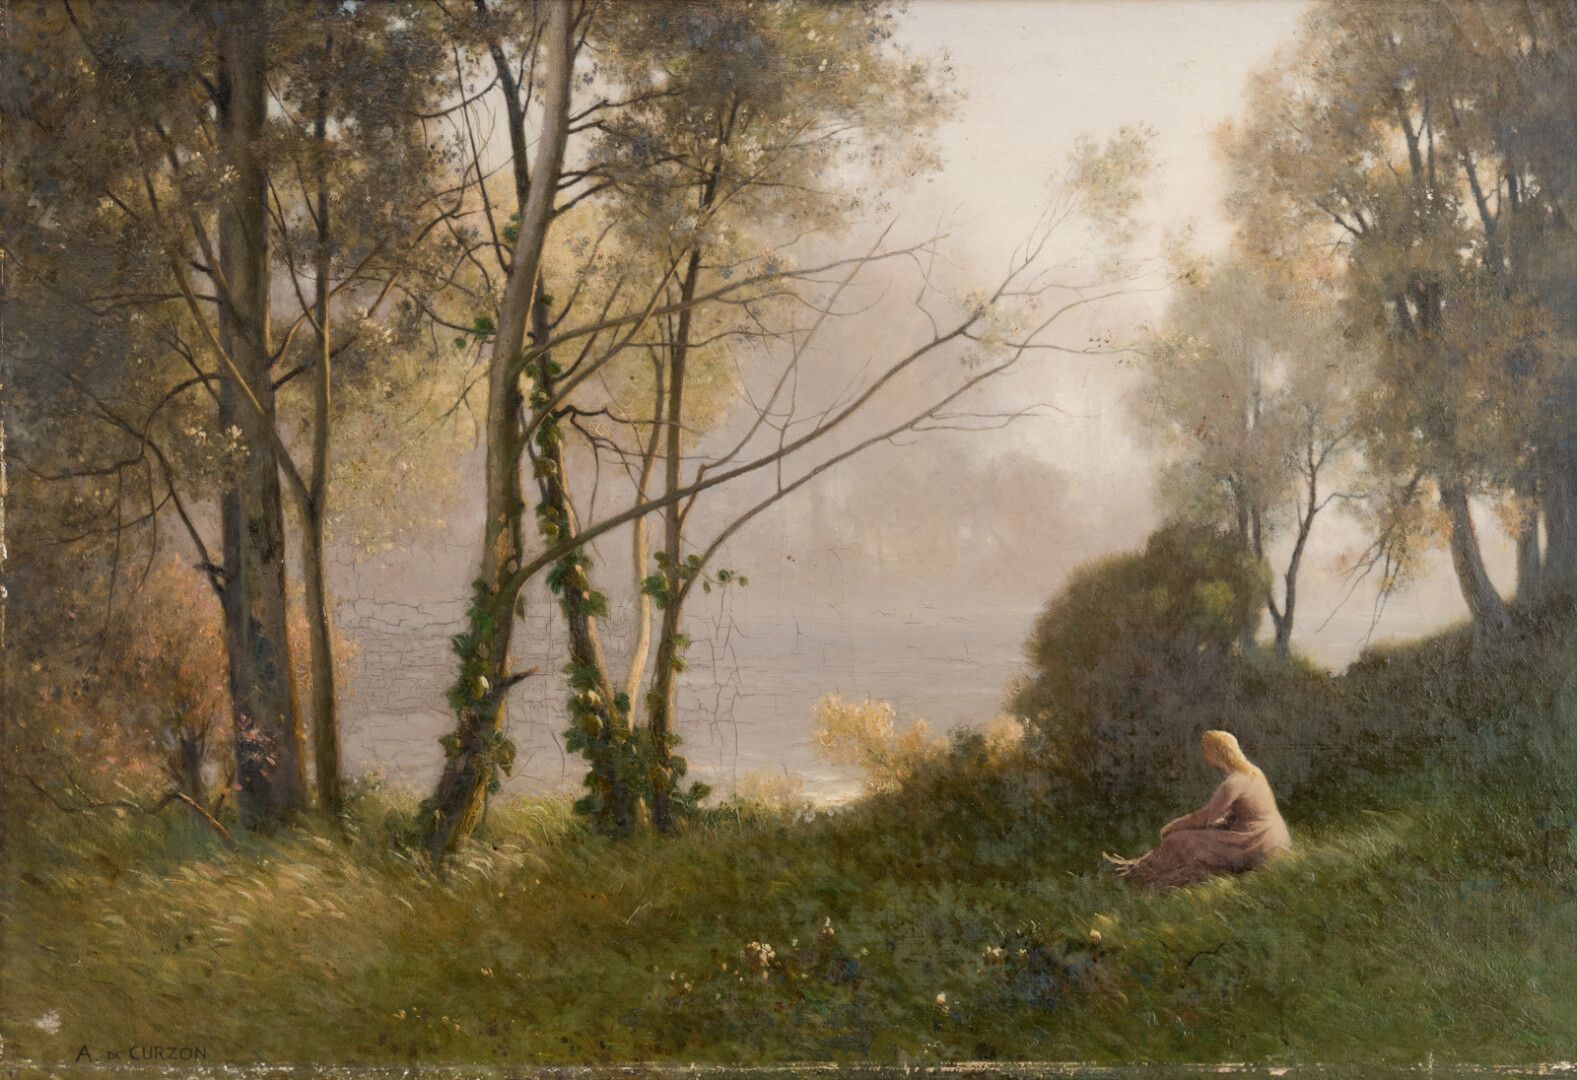 Null 阿尔弗雷德-德-库尔松(1820-1895)

湖边的梦想家

布面油画，左下角有签名

50 x 73 cm